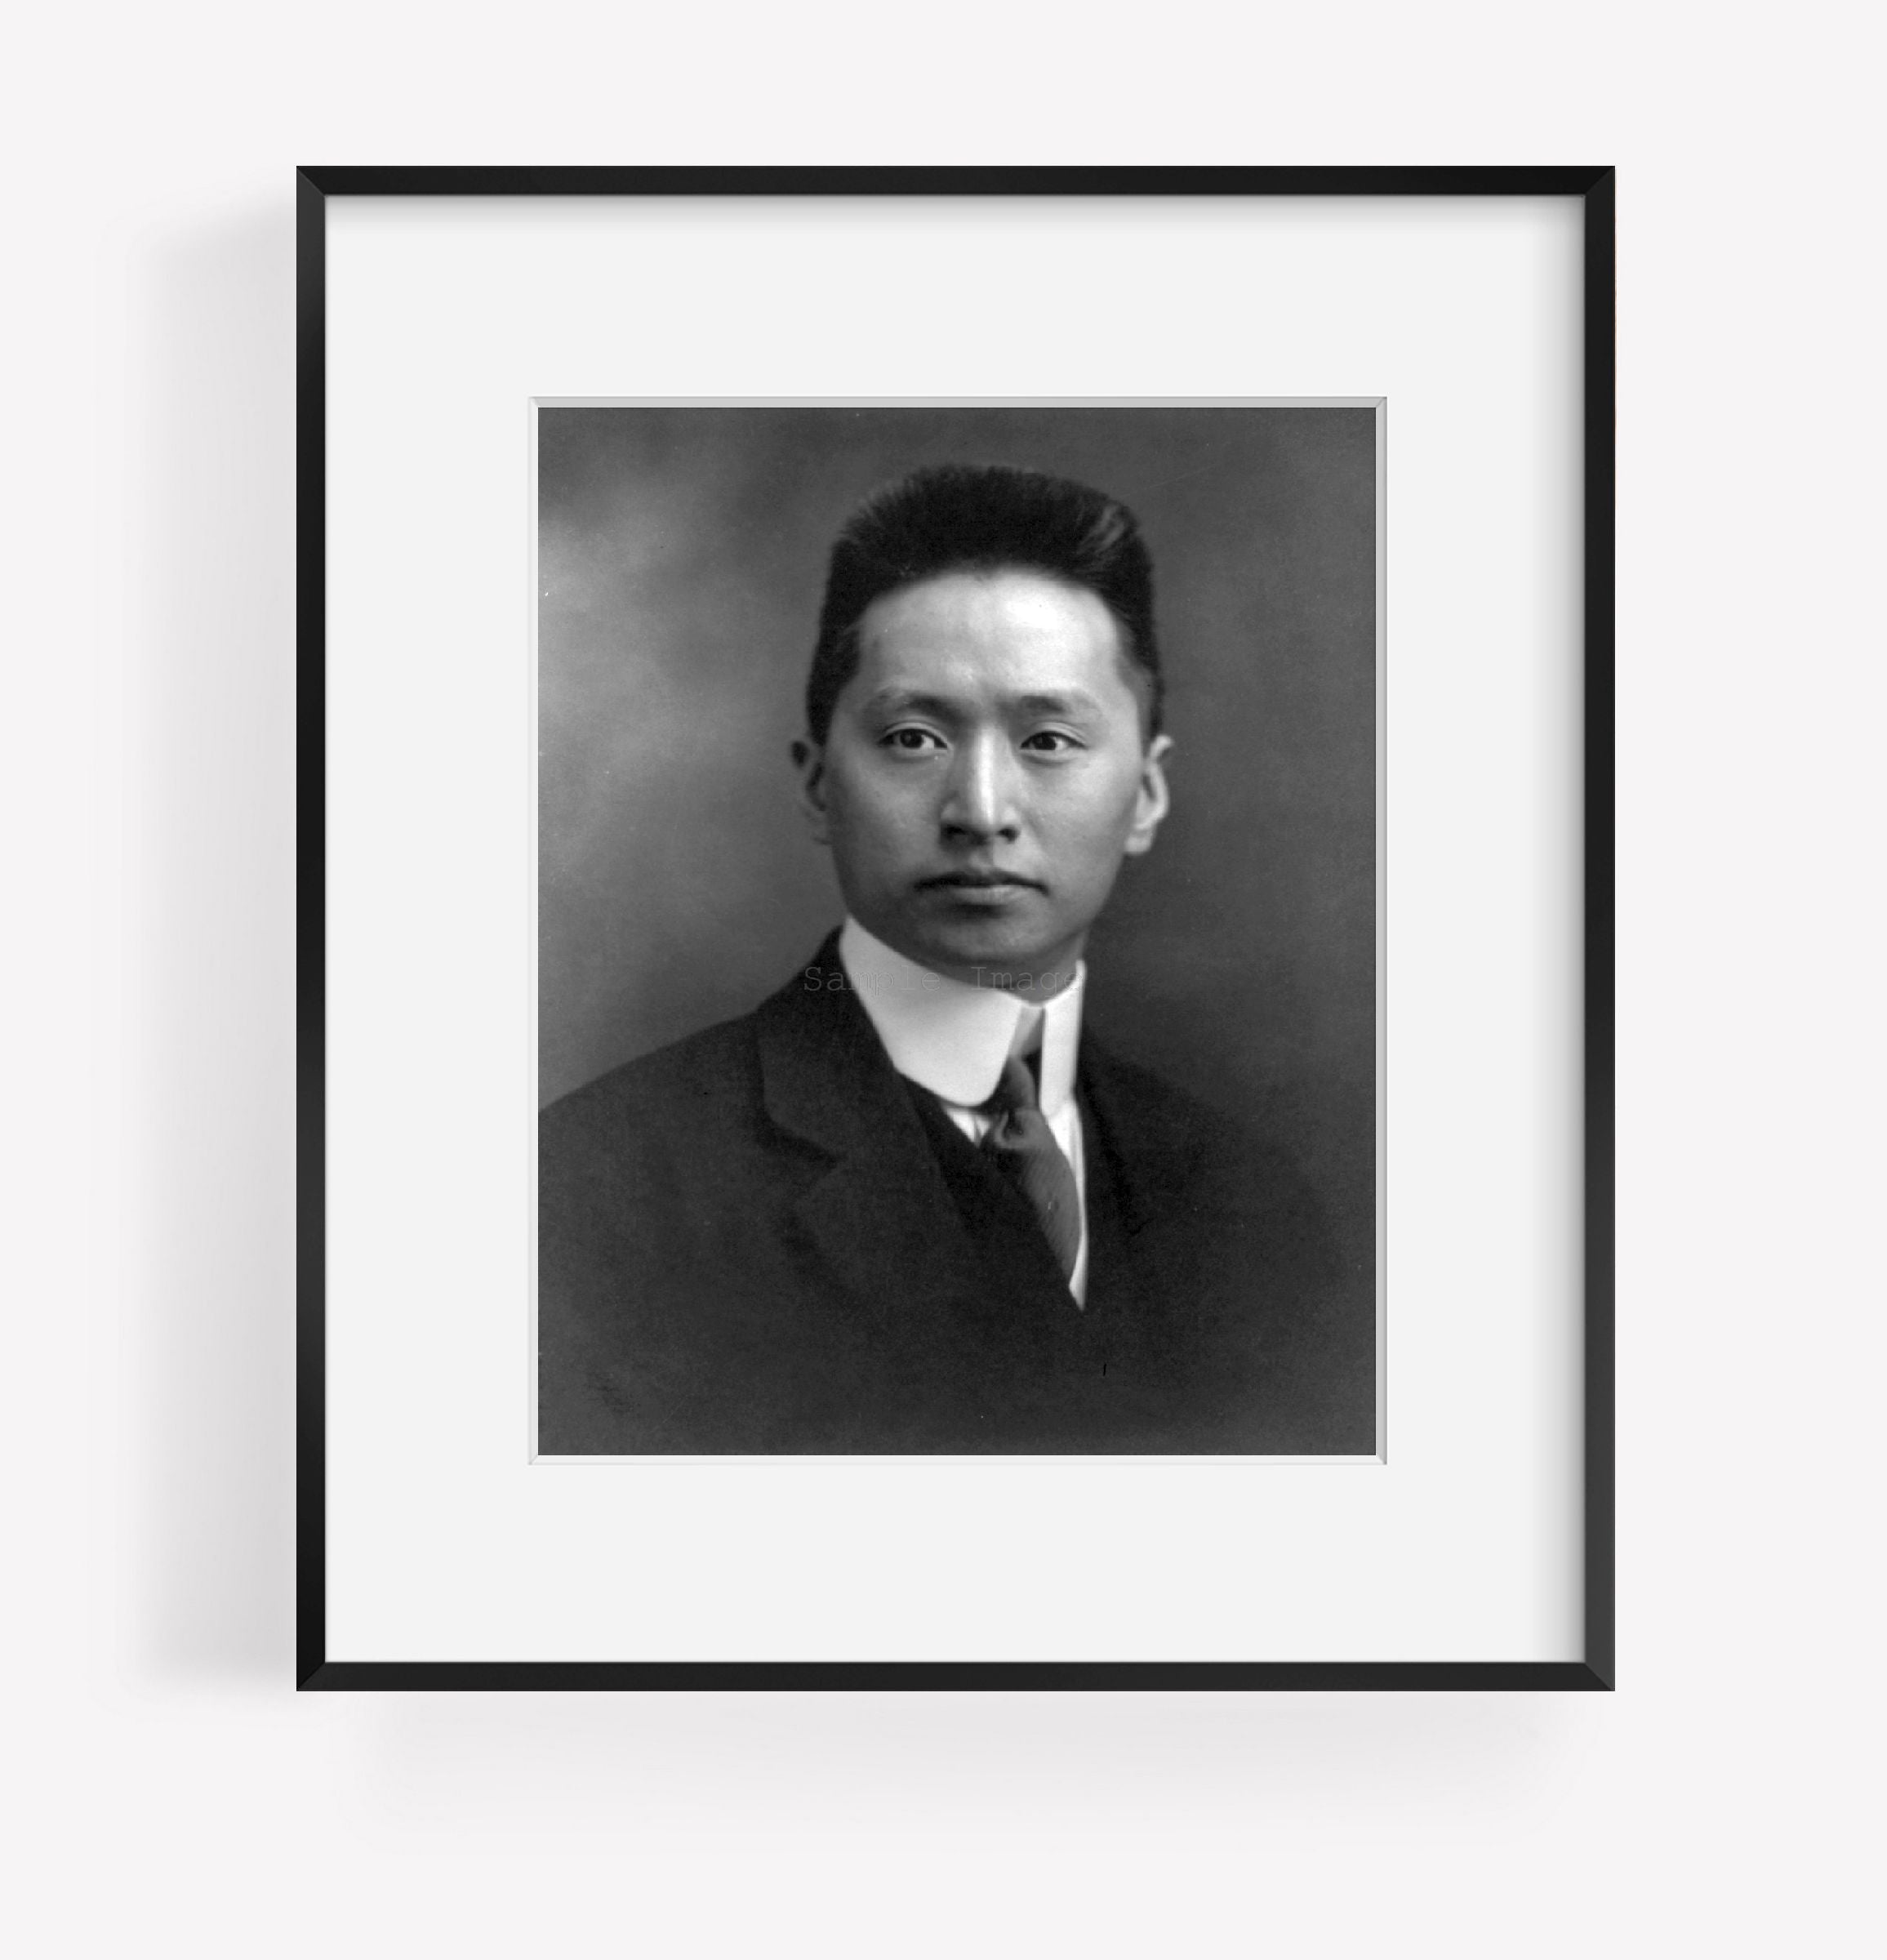 c1916 photograph of Wellington Koo, bust portrait, facing front